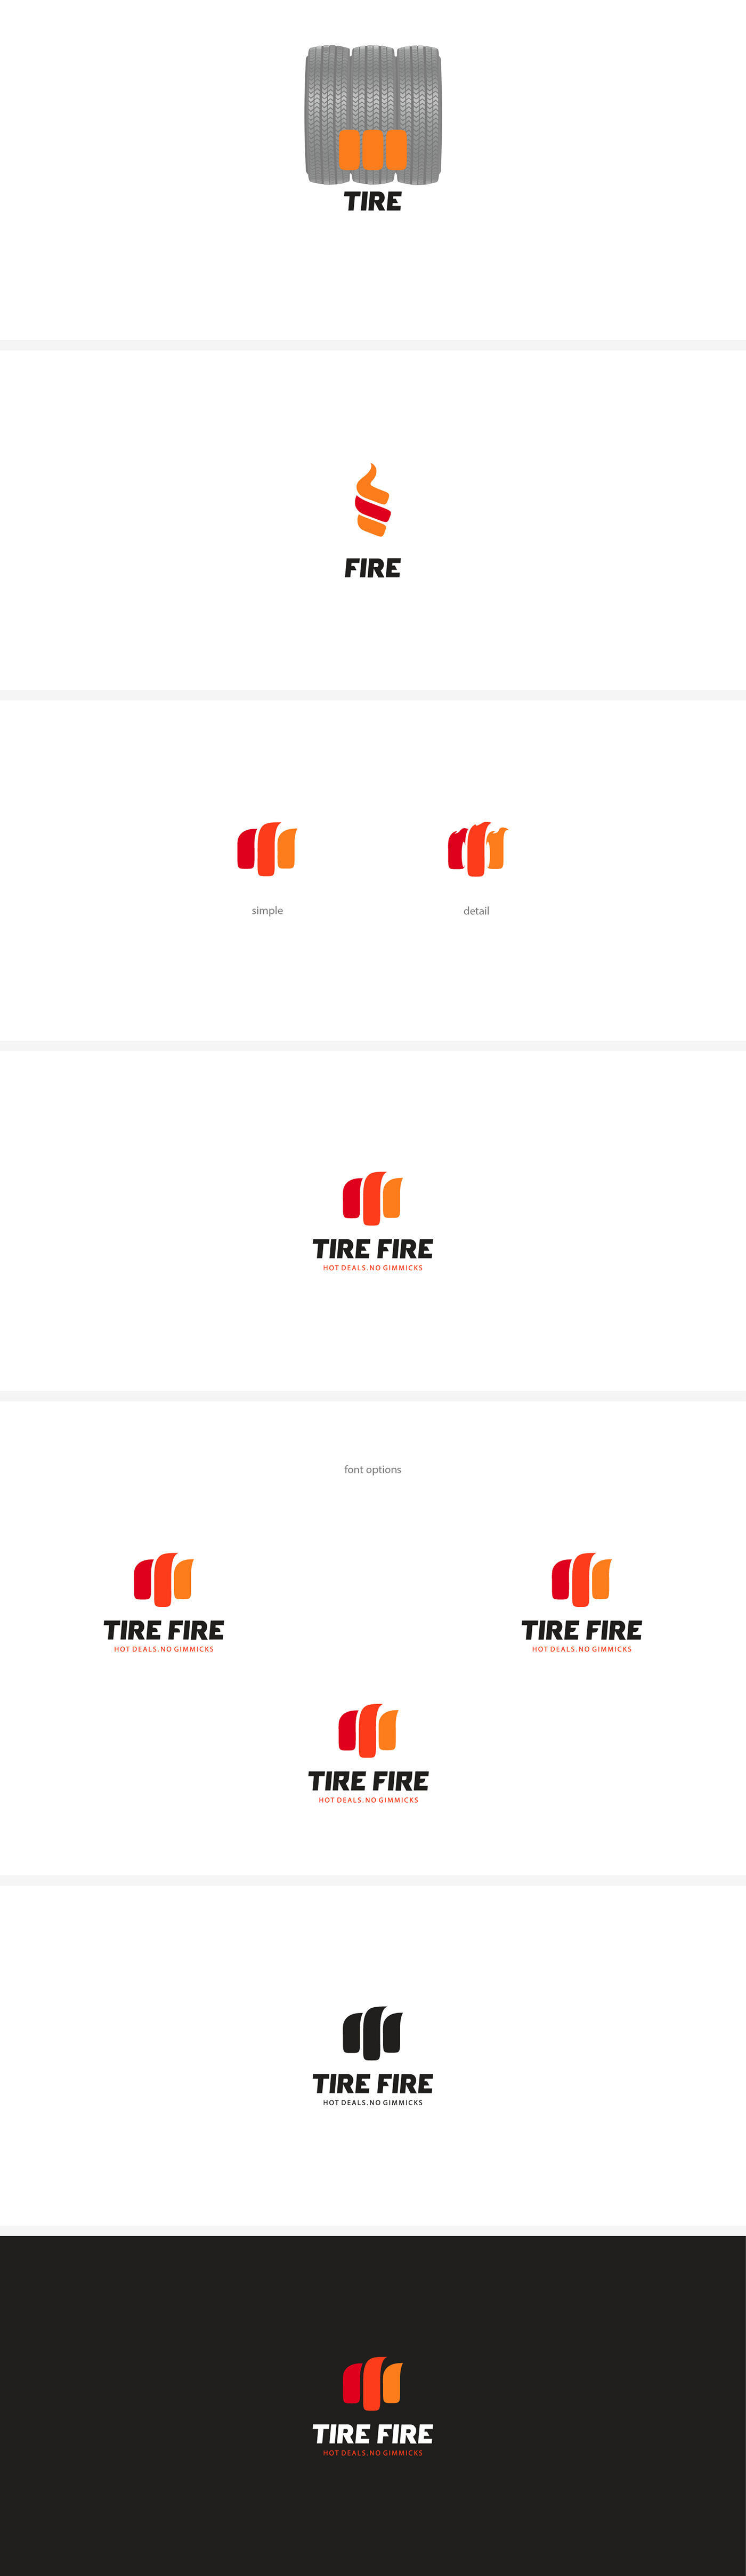 Tire fire logo branding  simplelogo pictoriallogo Pictorial abstract abstractmark tirelogo